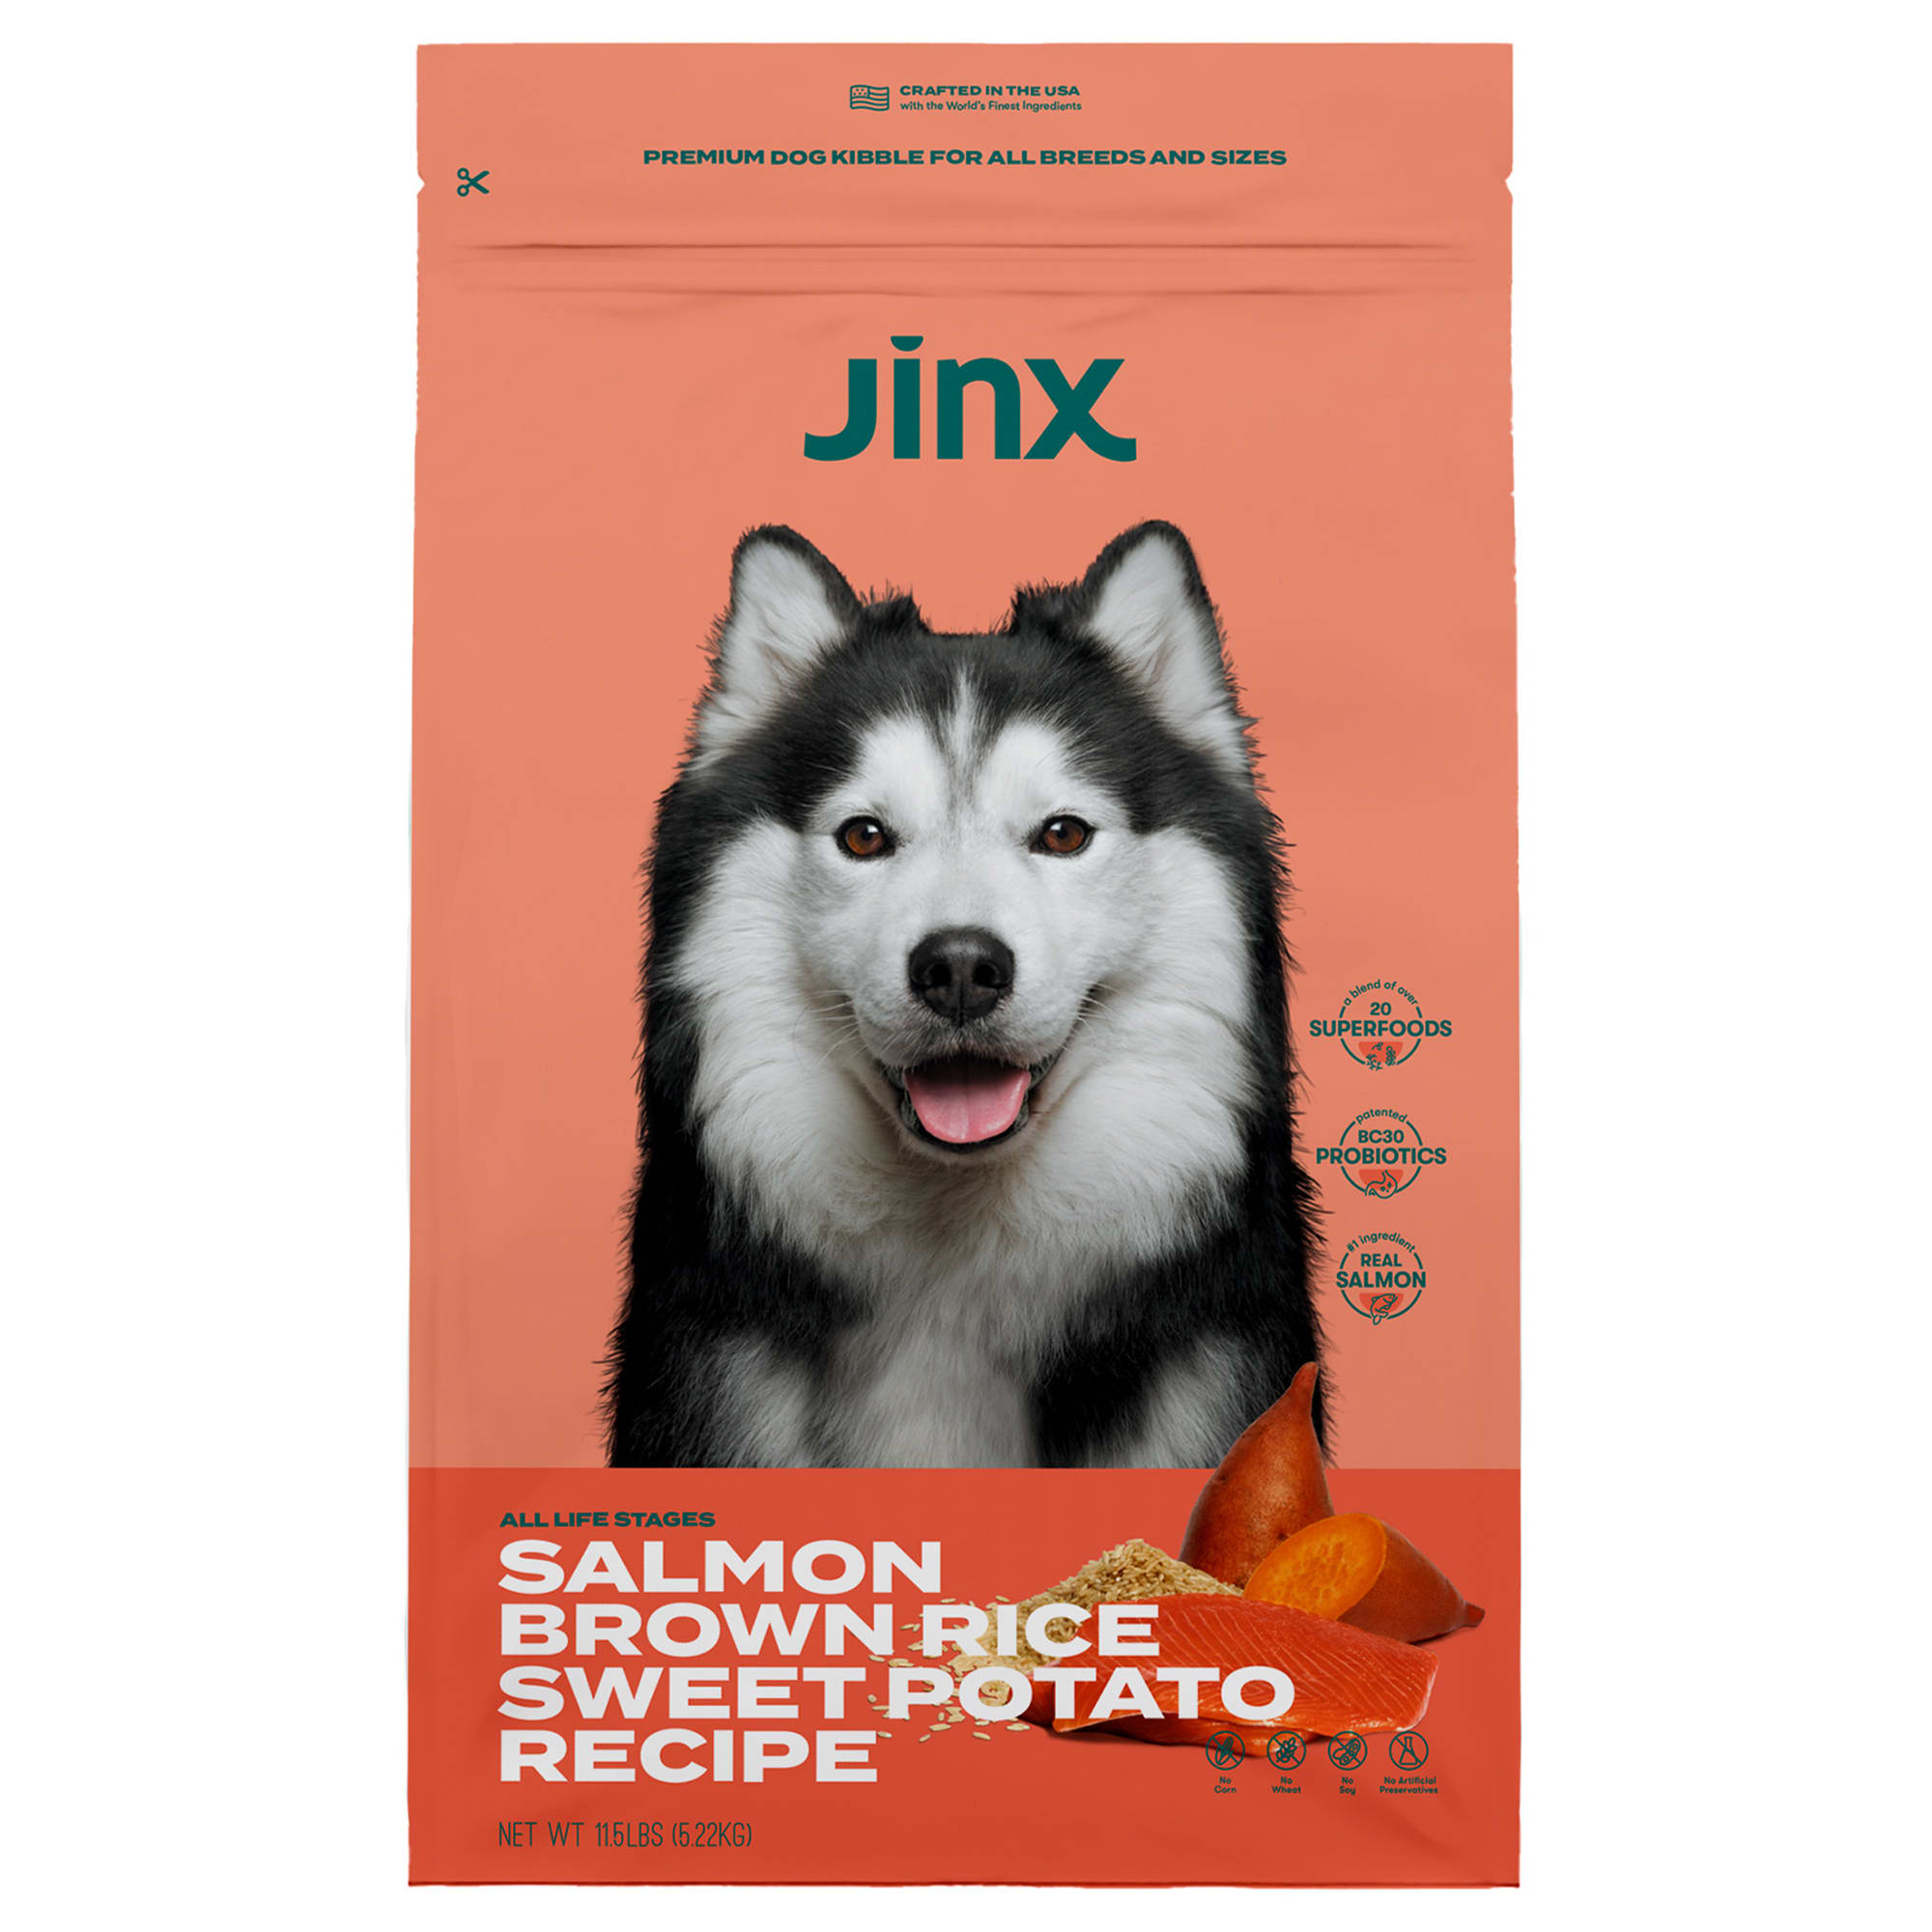 Jinx salmon dog food